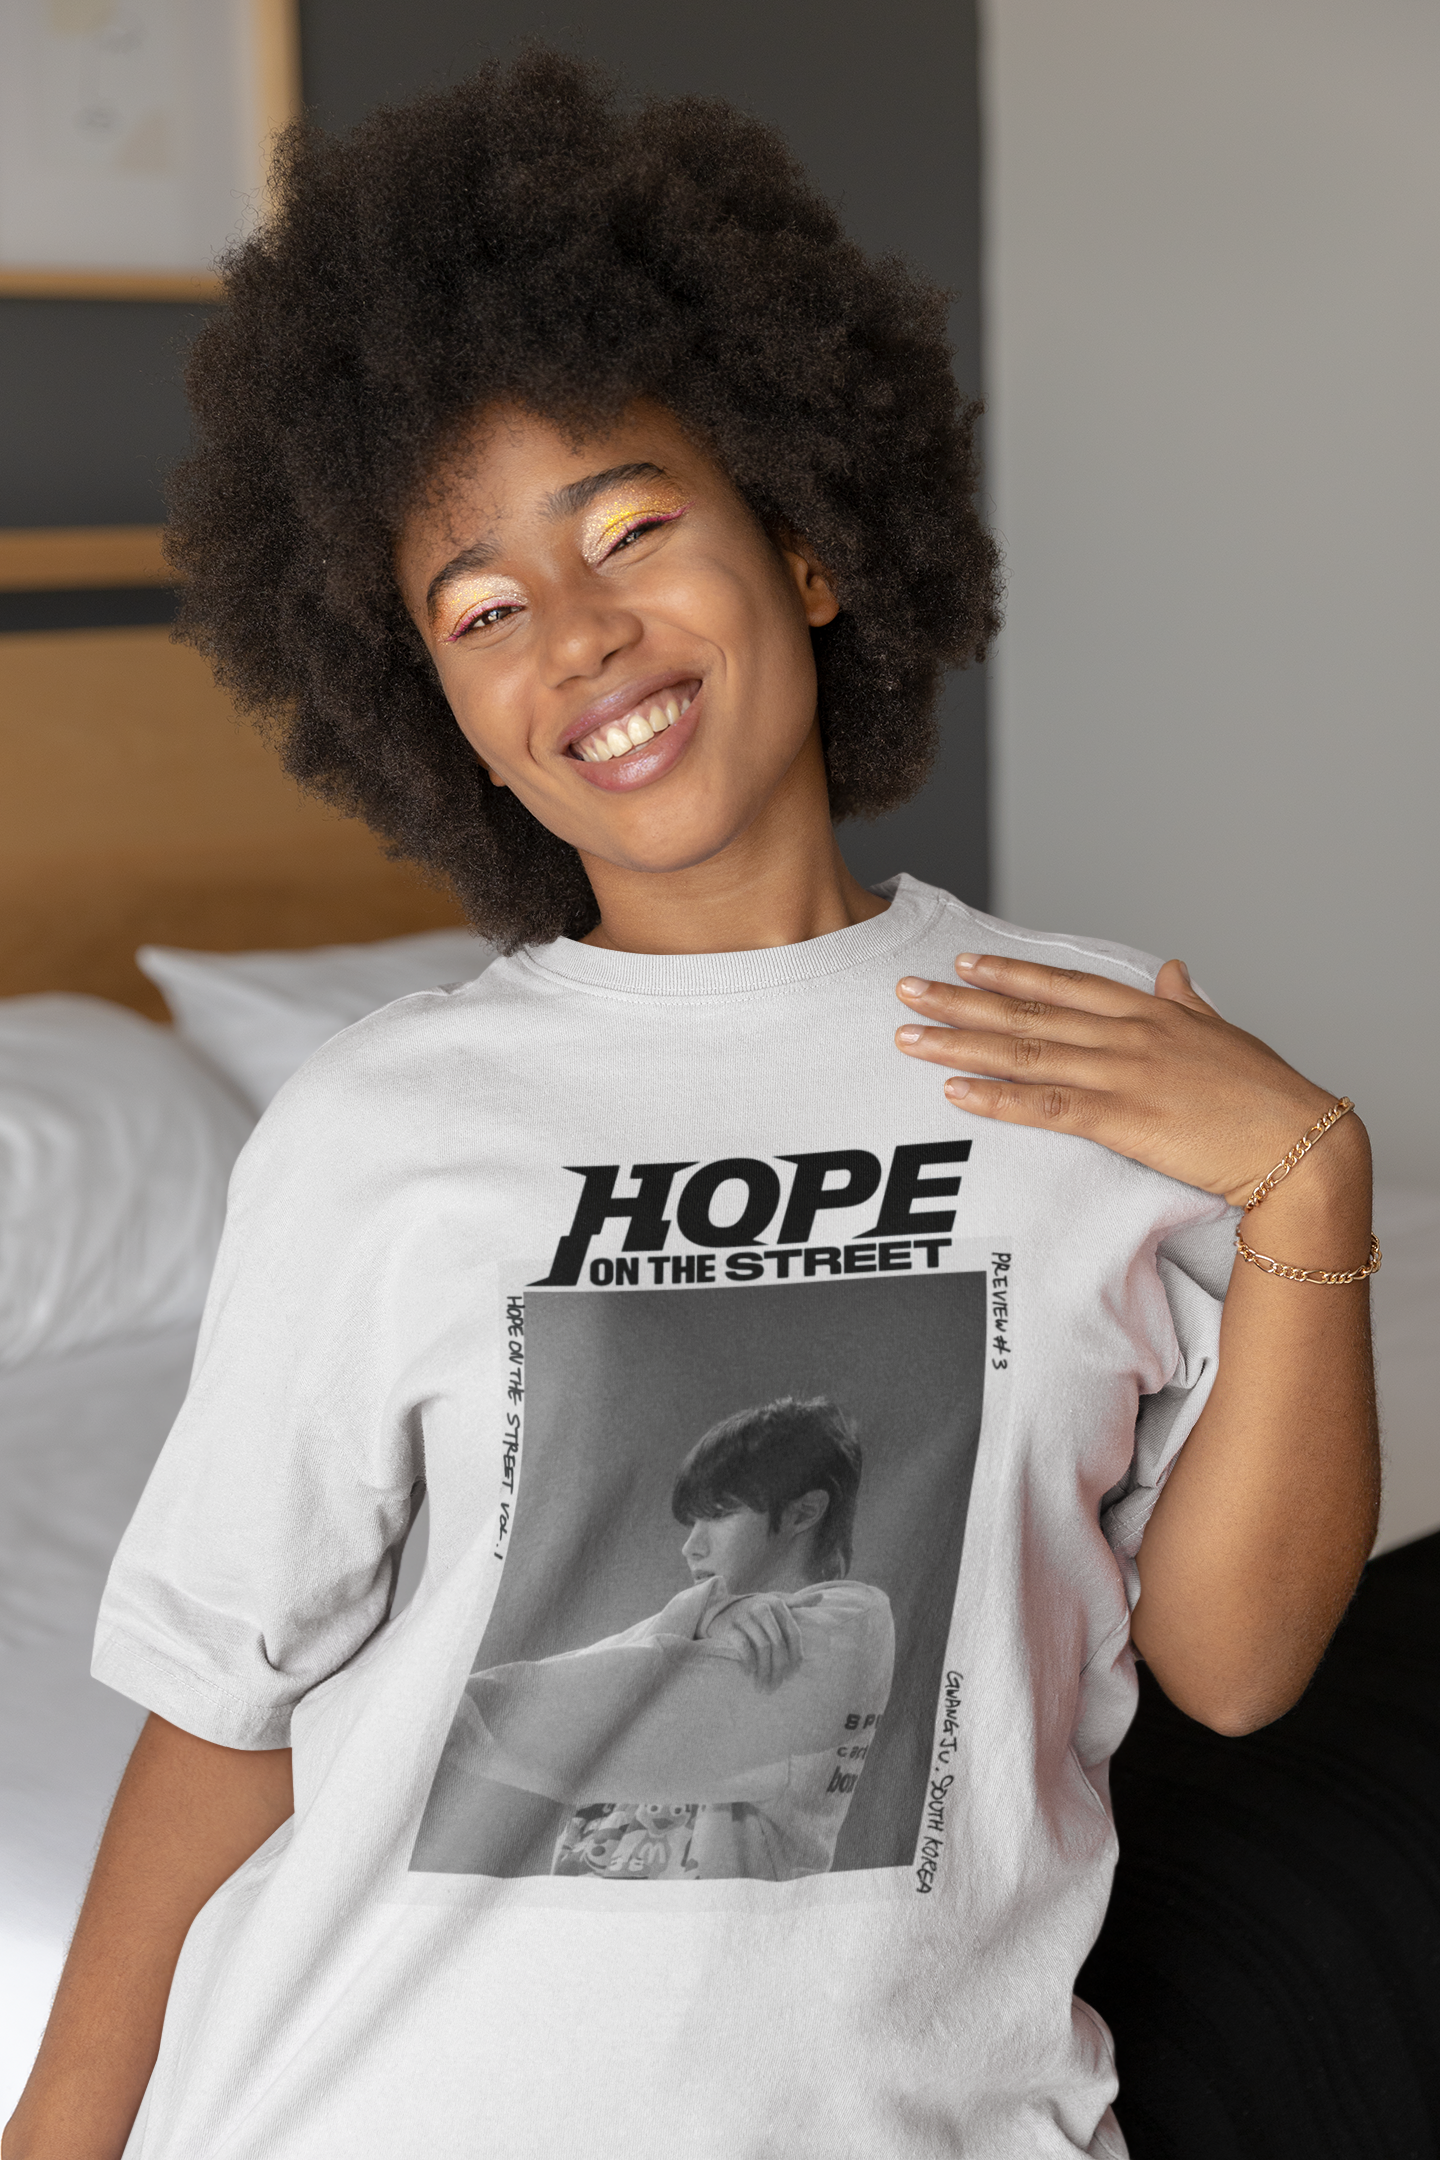 J-Hope Hope on the Street T-Shirt